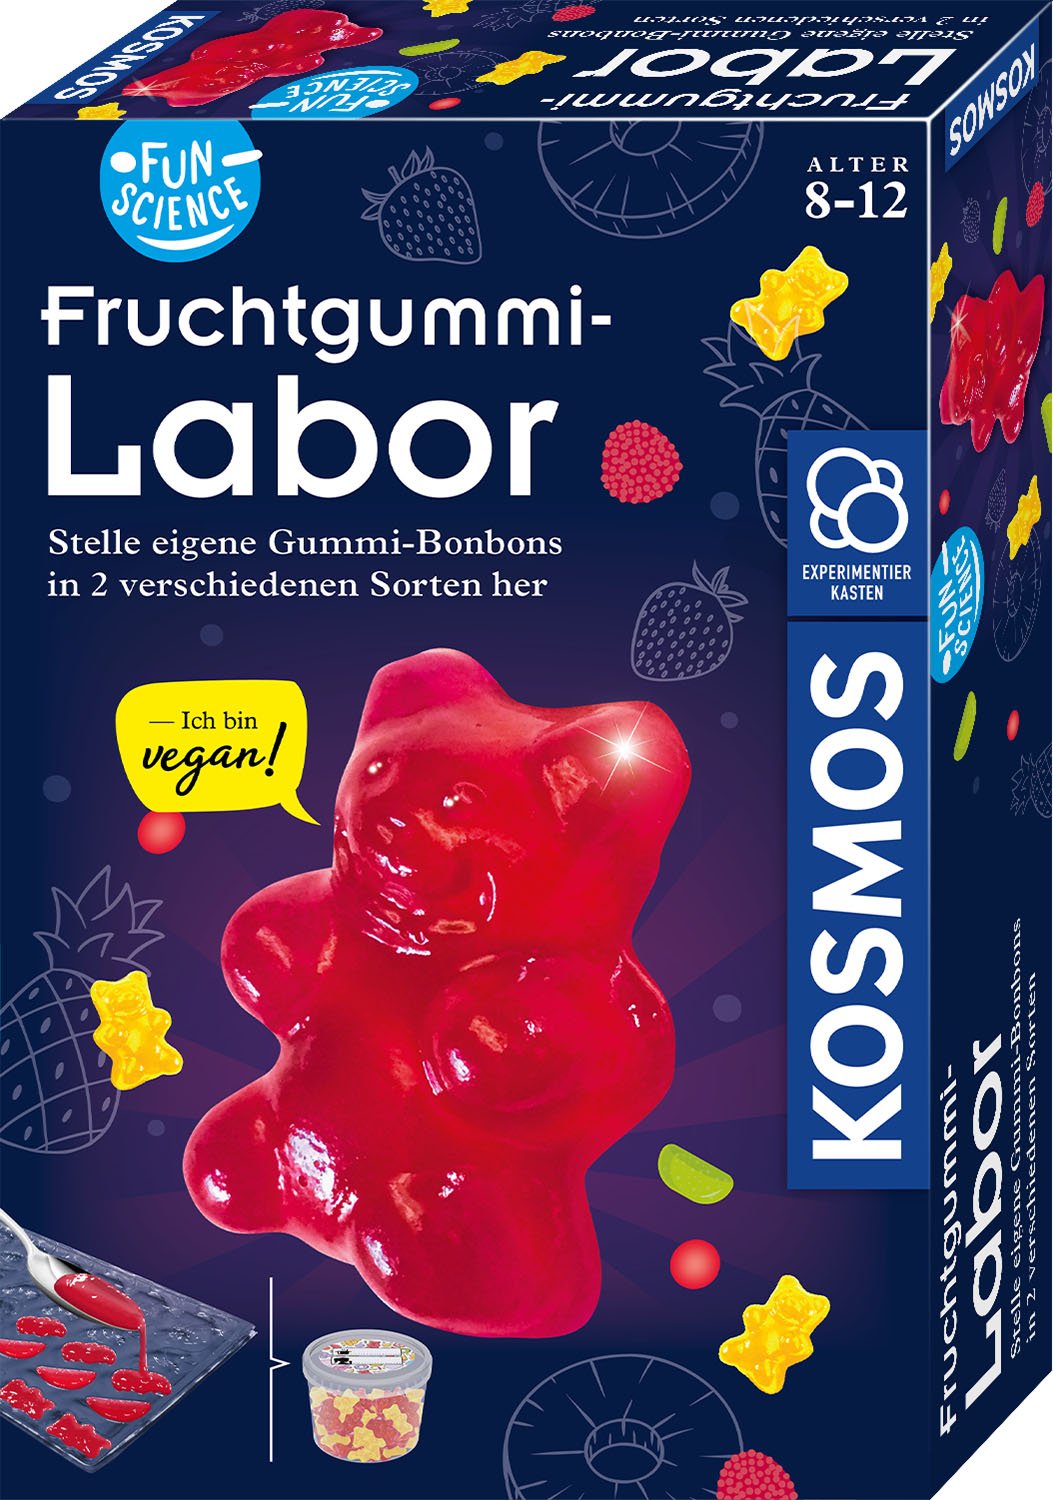 Fun Science Fruchtgummi-Labor